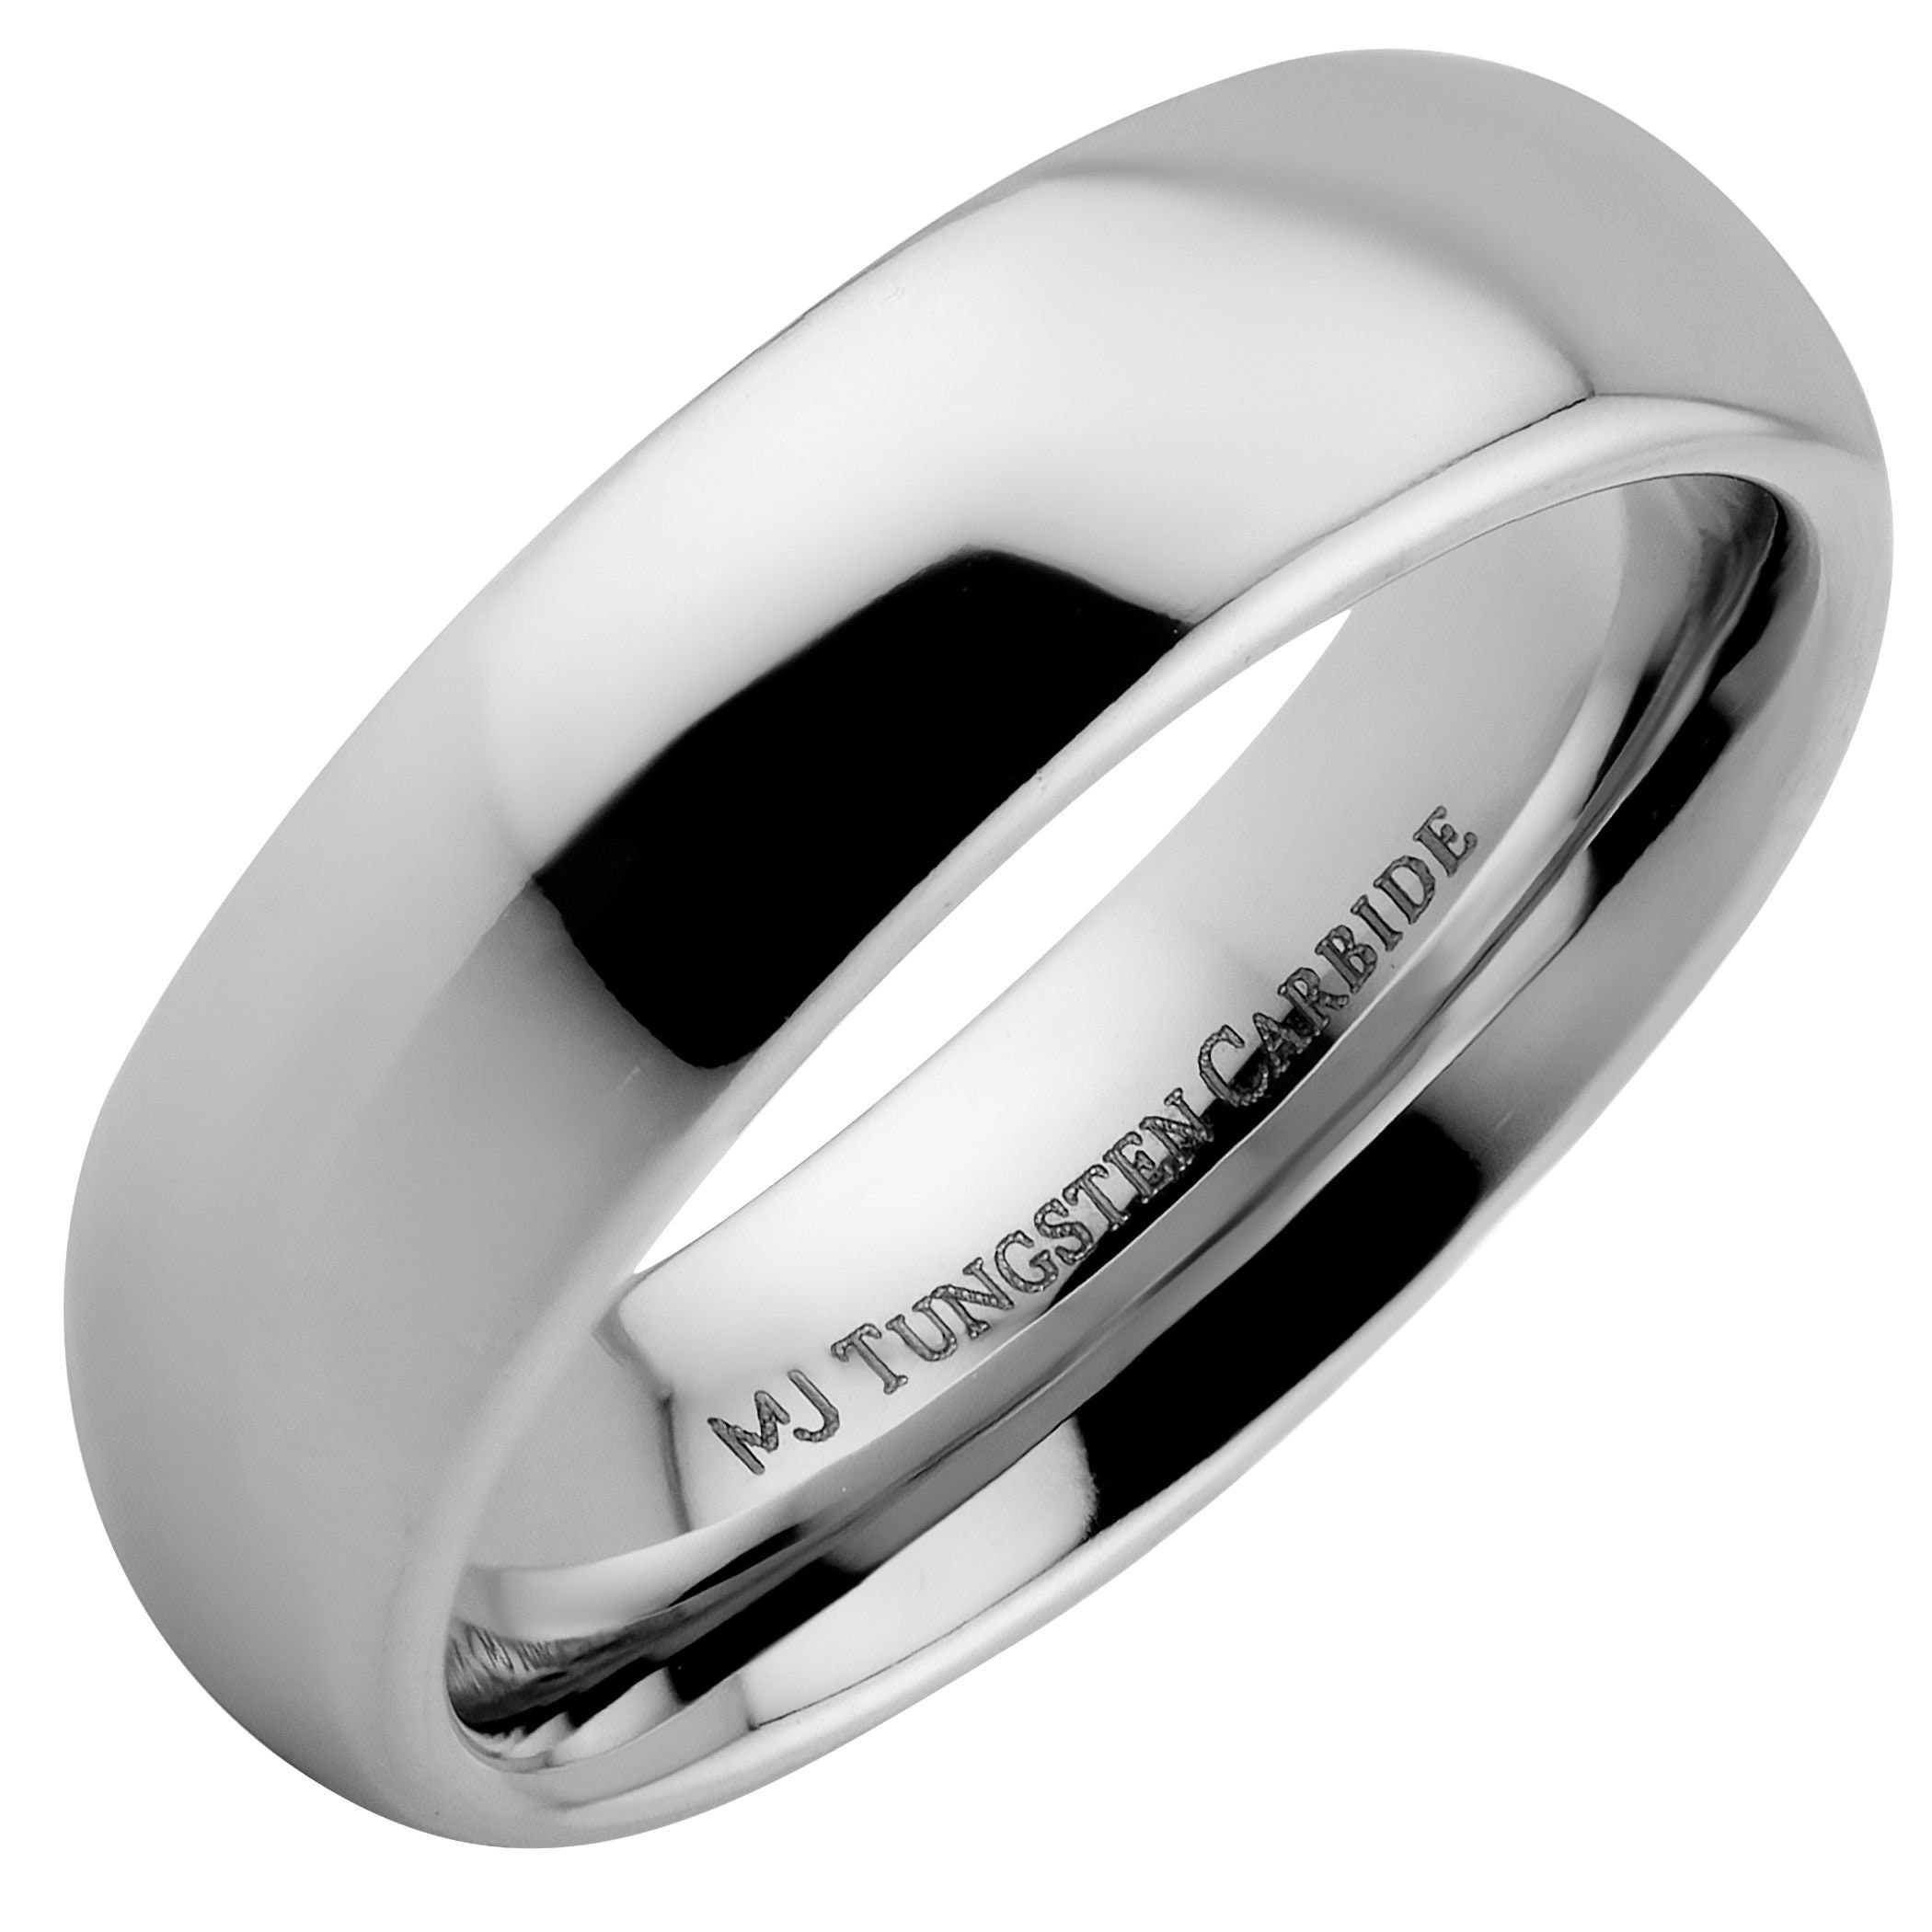 Jewelry Findings: 2.5 Key Ring Clip x2 w/Swivel Ring Silver - 775749227765